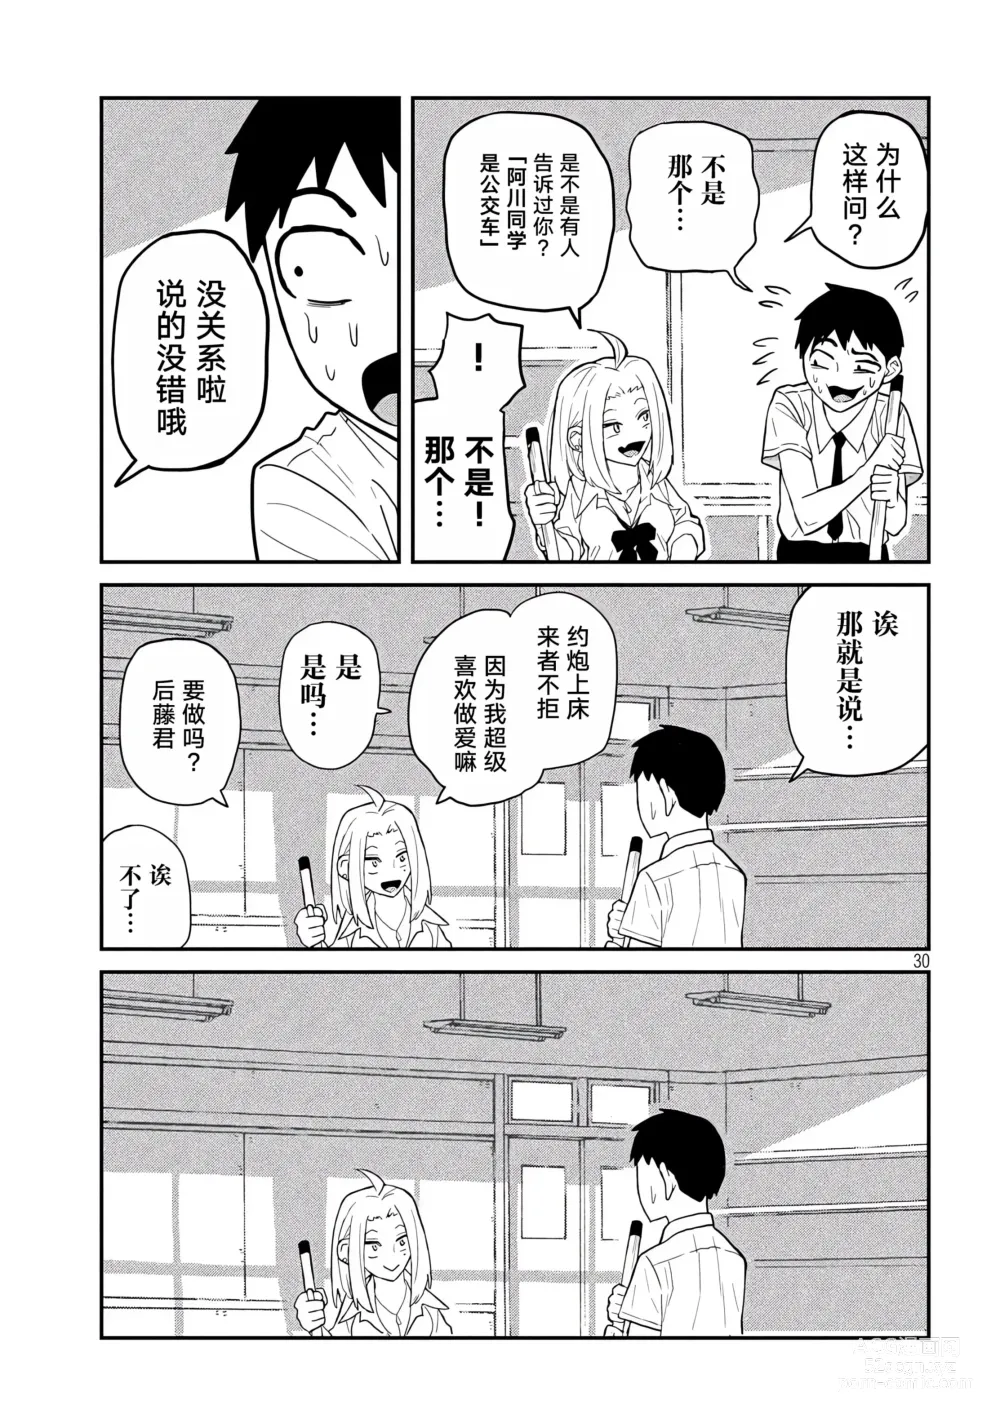 Page 31 of doujinshi 喜欢来者不拒的你